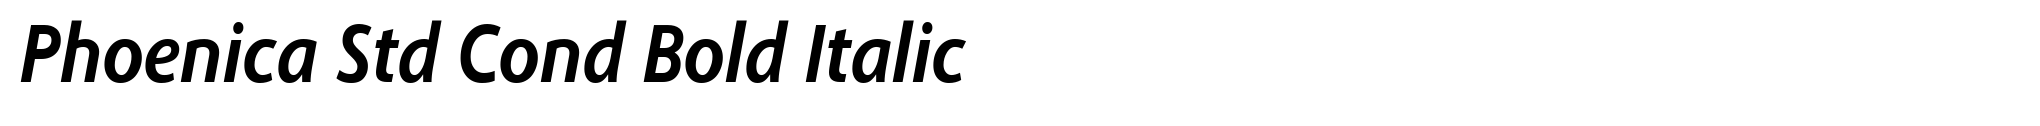 Phoenica Std Cond Bold Italic image